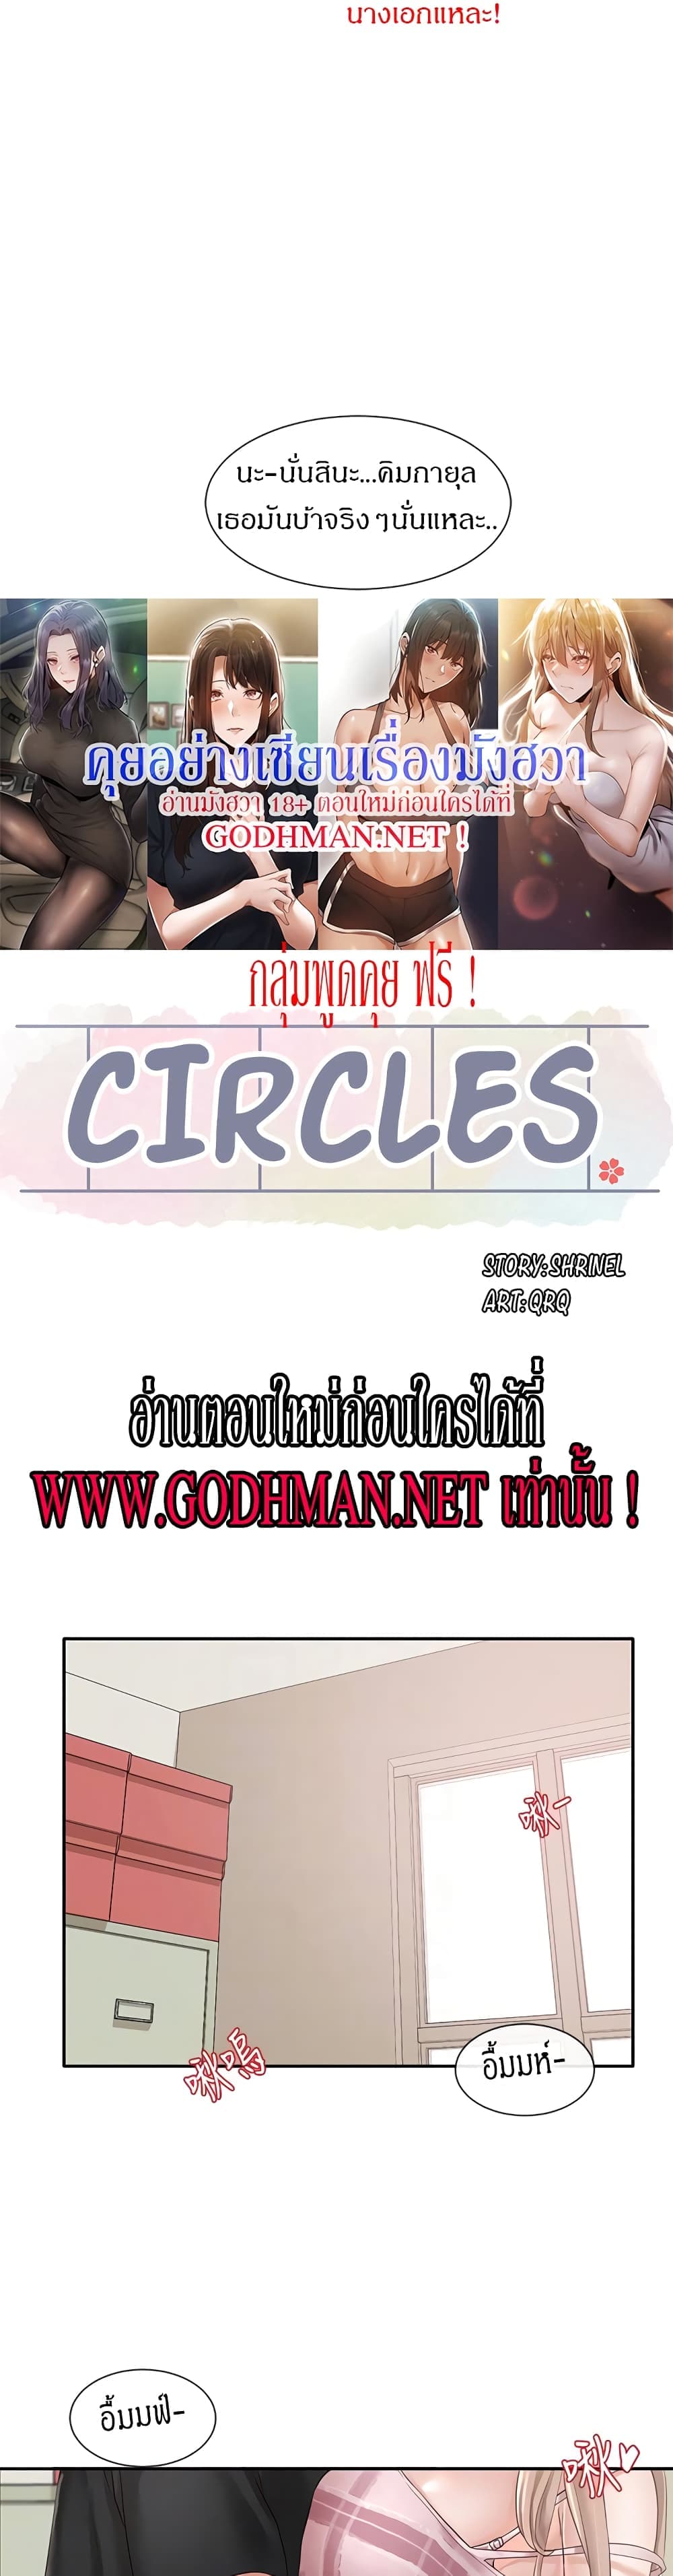 Theater Society (Circles) 54-54